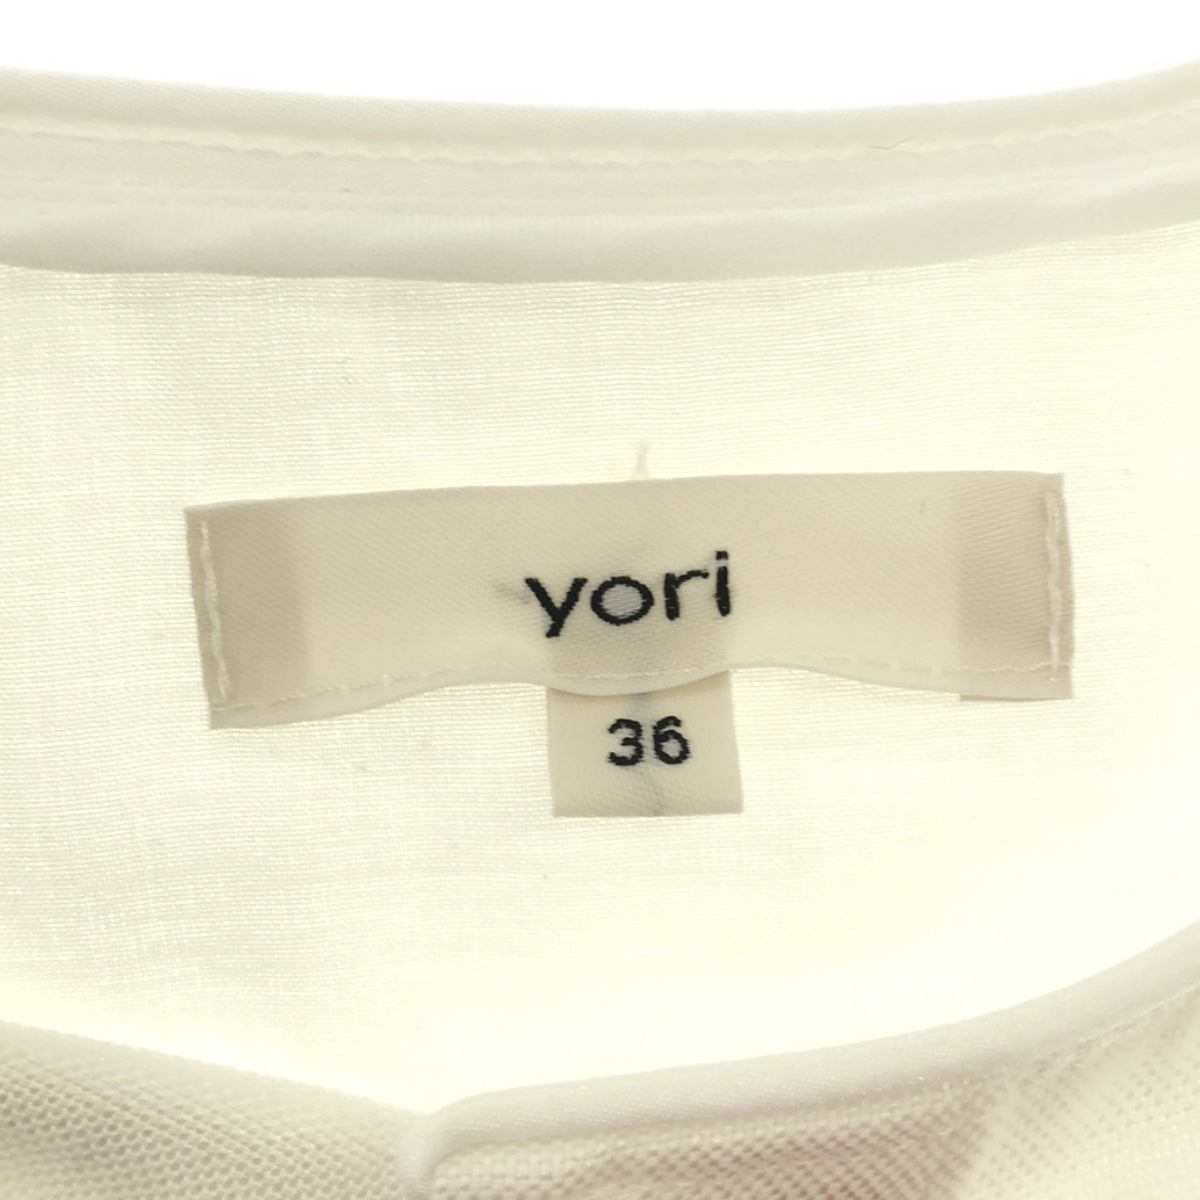 yori / ヨリ | コットンリネンシャツ | 36 | レディース